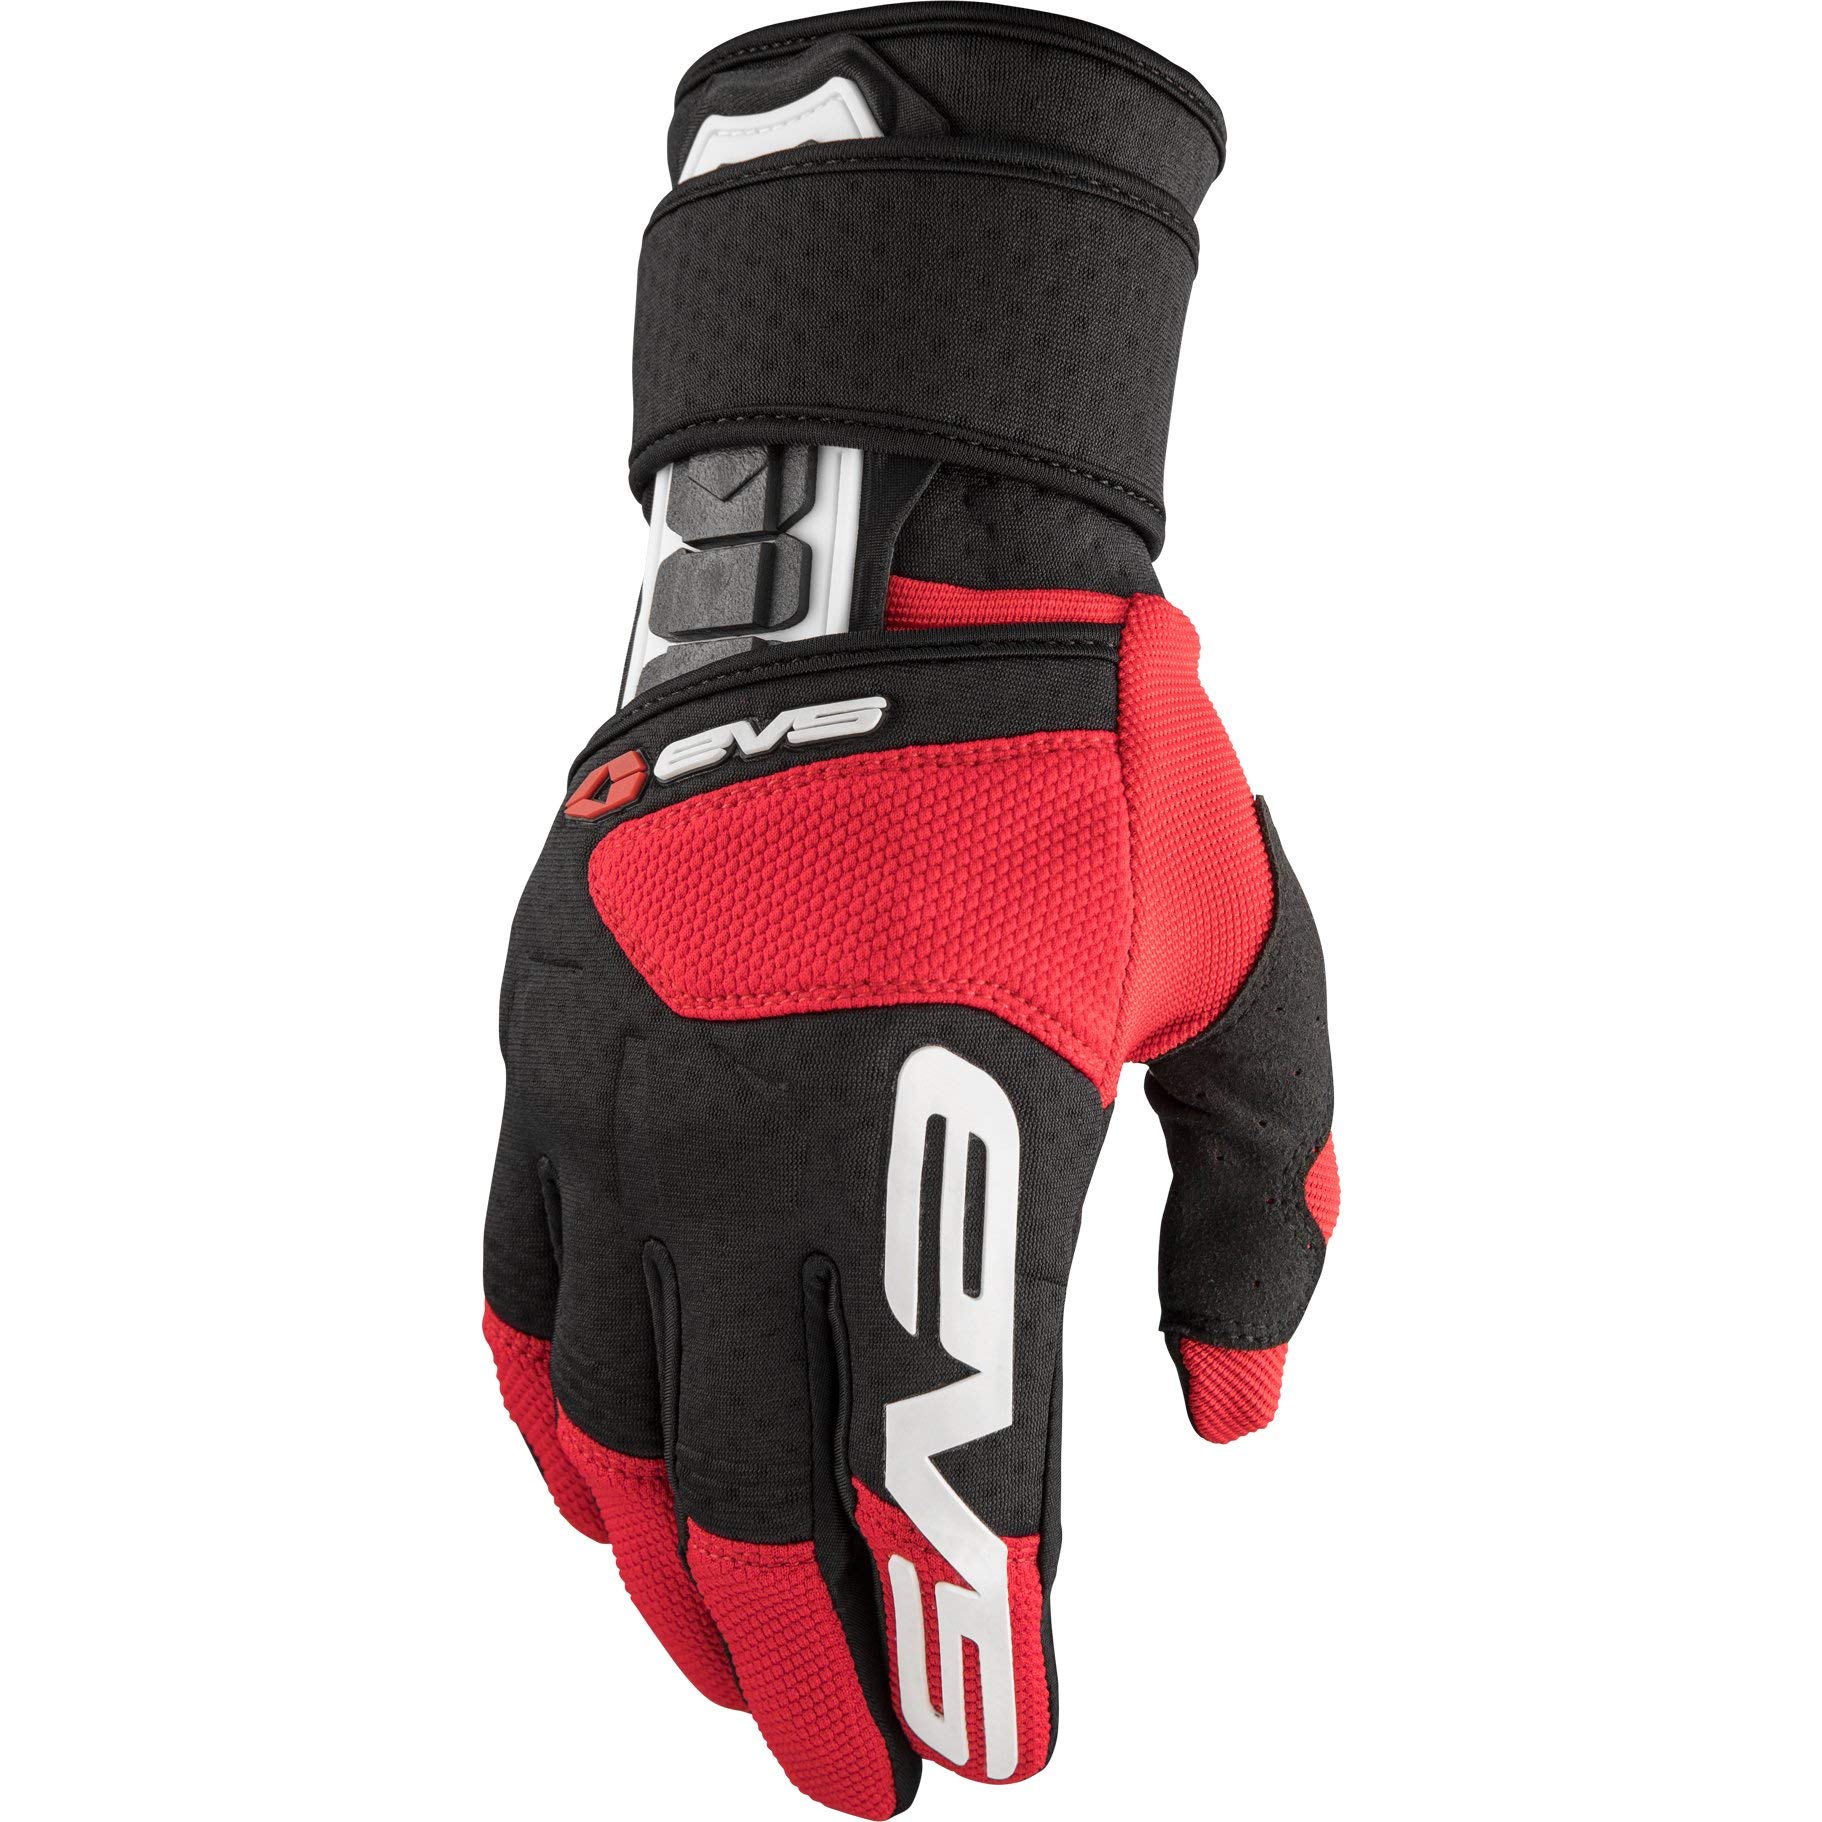 EVS Sports Wrister Glove with Wrist Protection, Adult, L, Black, Größe large von EVS Sports